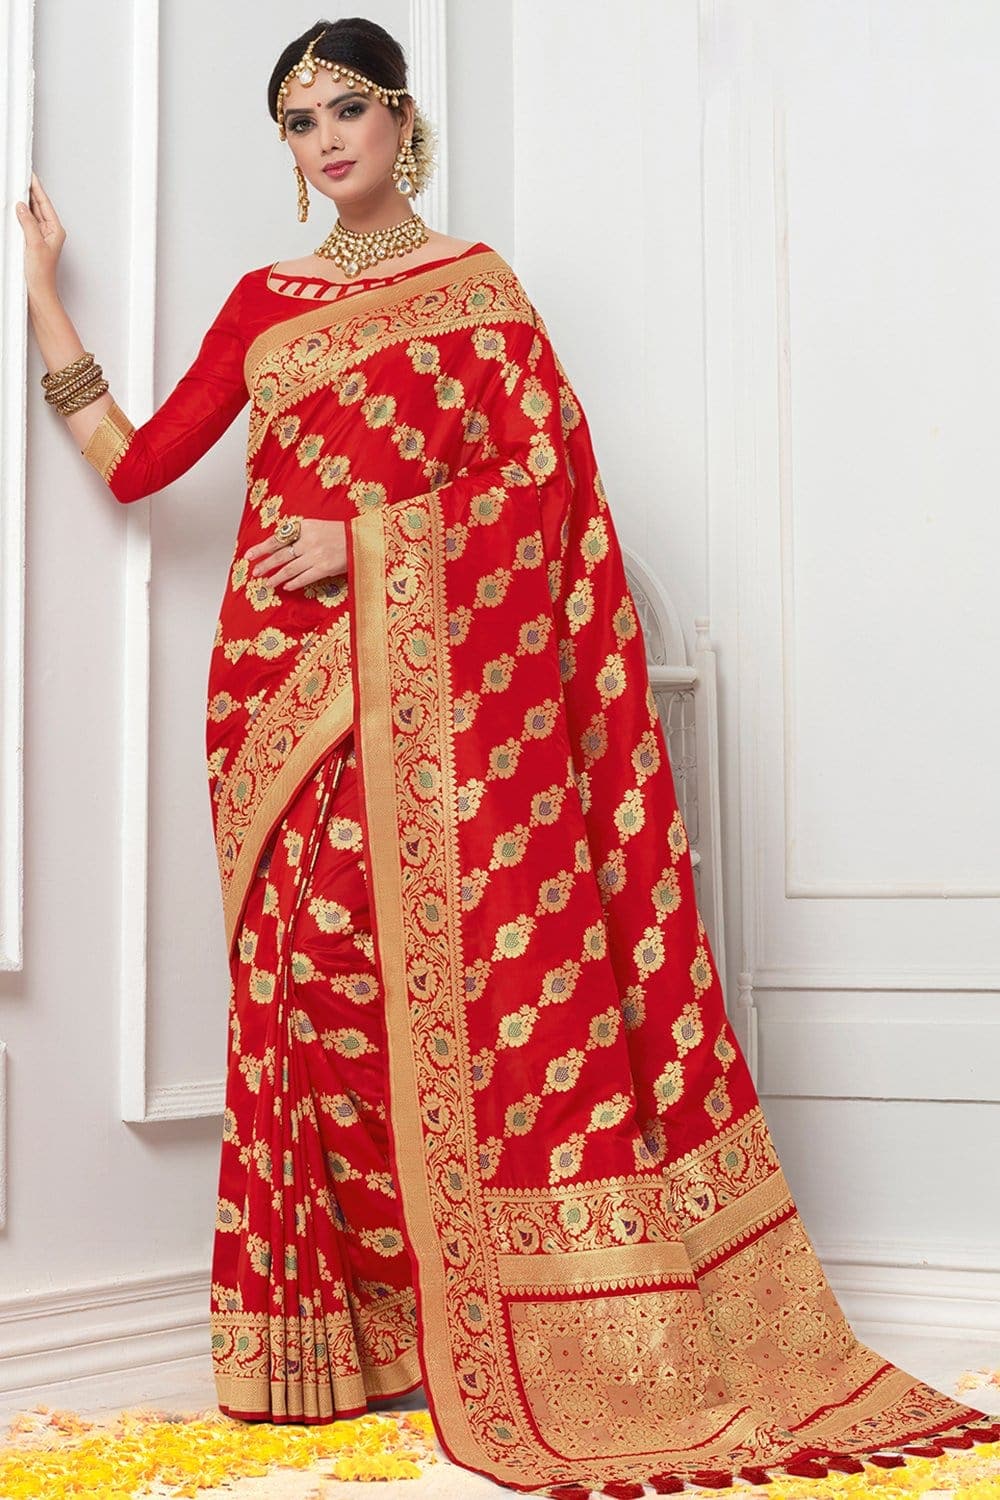 Beautiful carnelian red banarasi  saree - From Wedding sutra collection - Buy online on Karagiri - Free shipping to USA